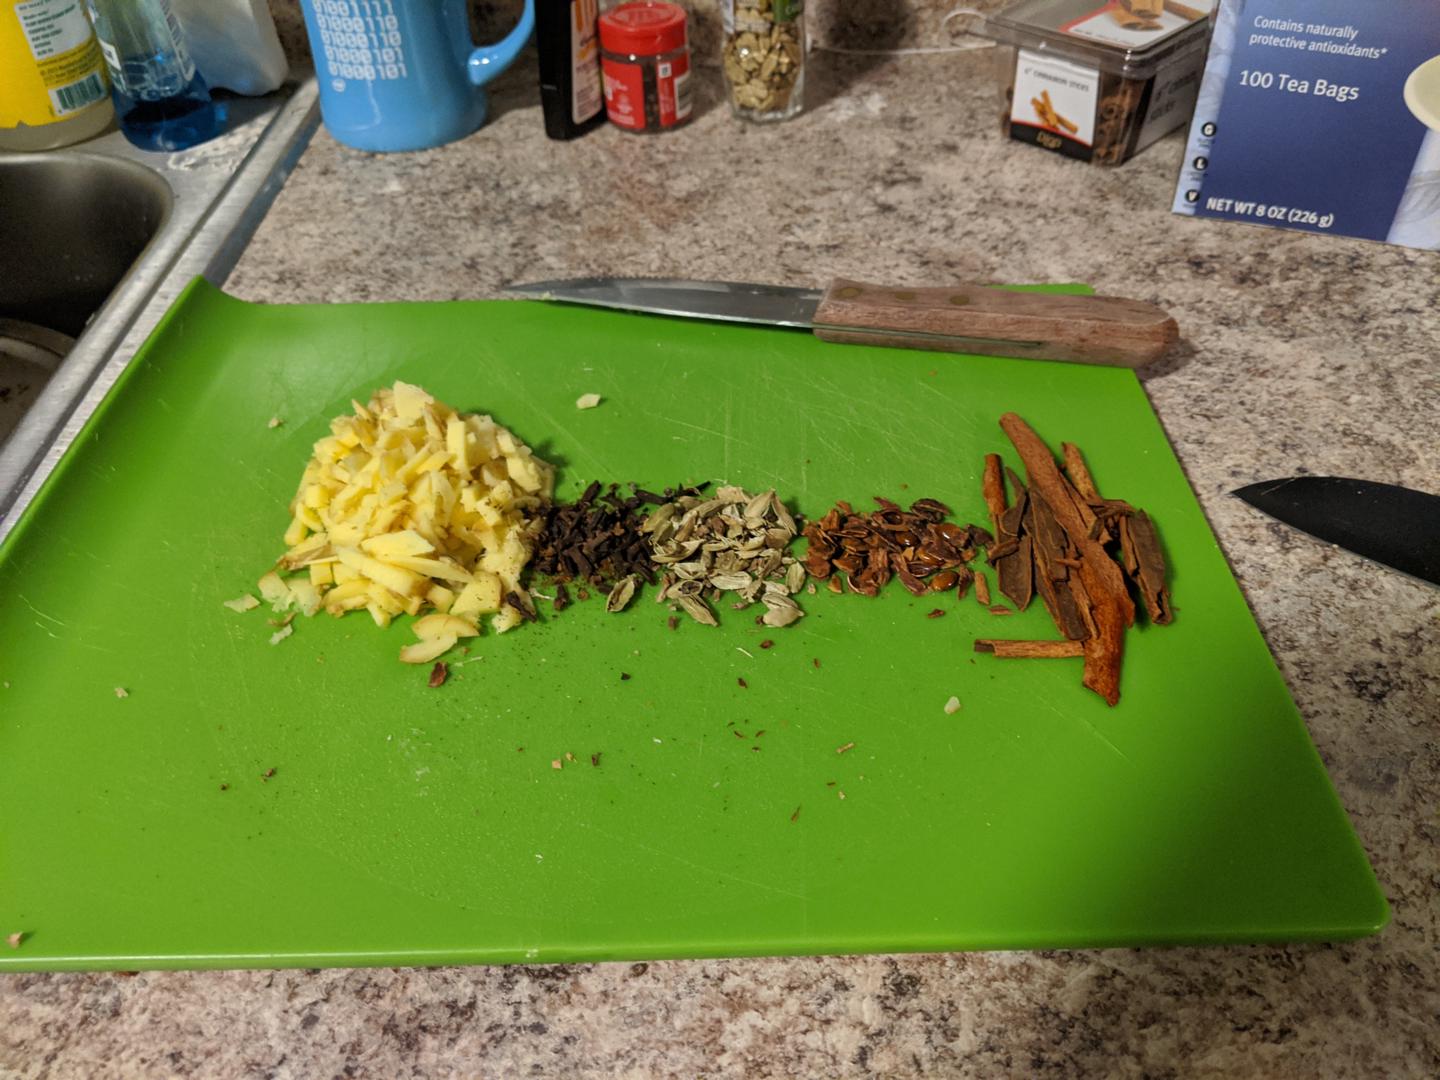 Prepared ingredients on cutting board